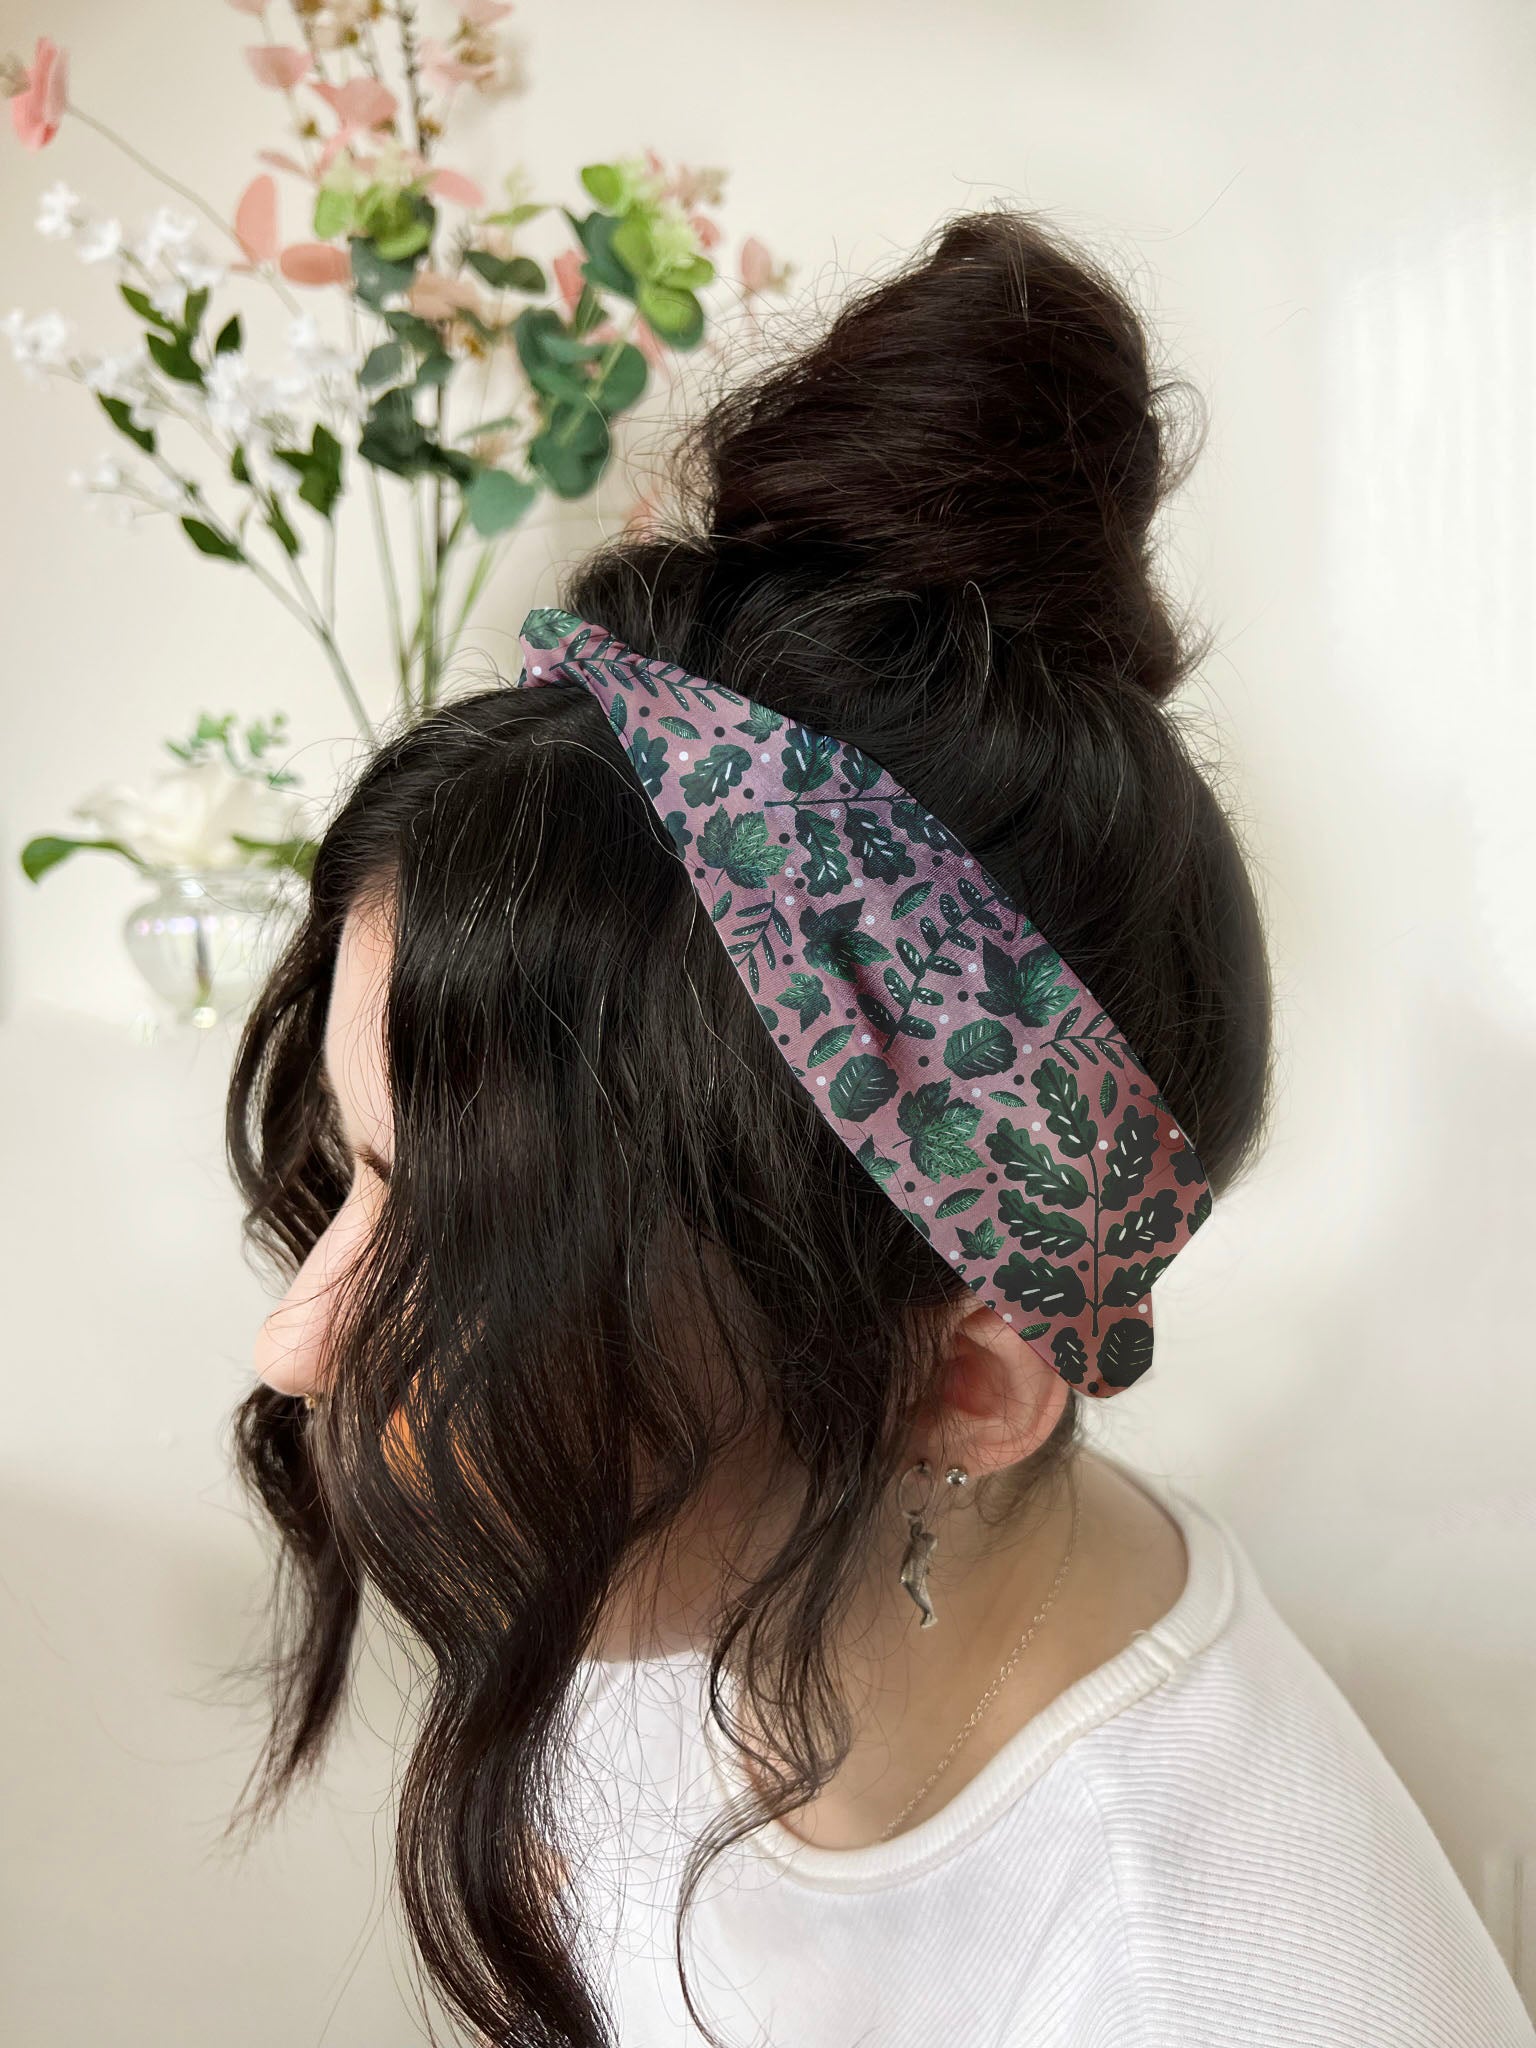 green foliage patterned headband on dark haired girl